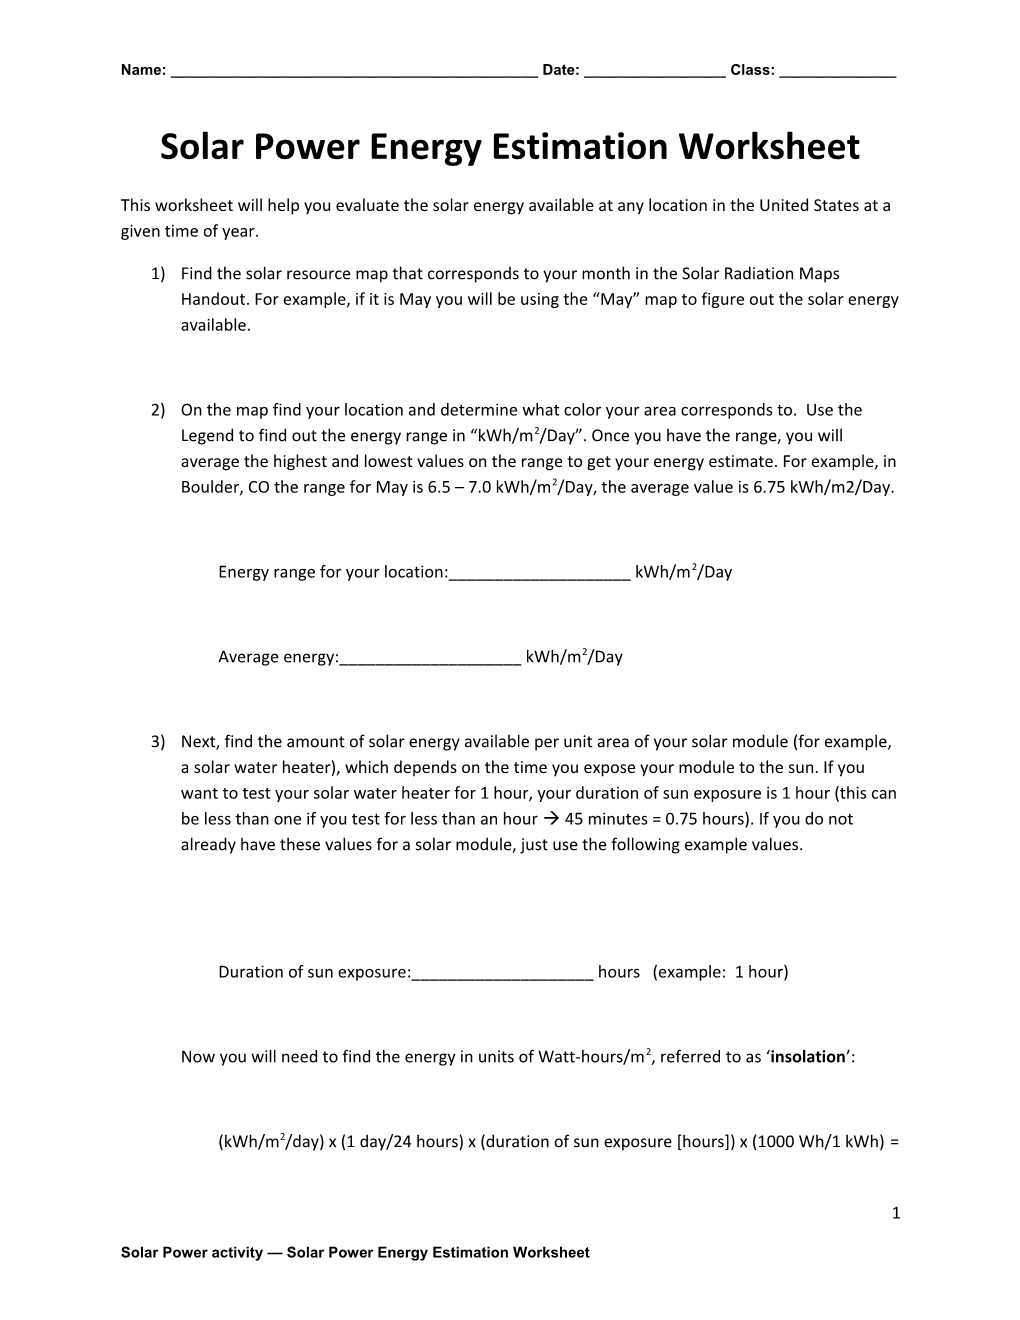 Solar Power Energy Estimation Worksheet